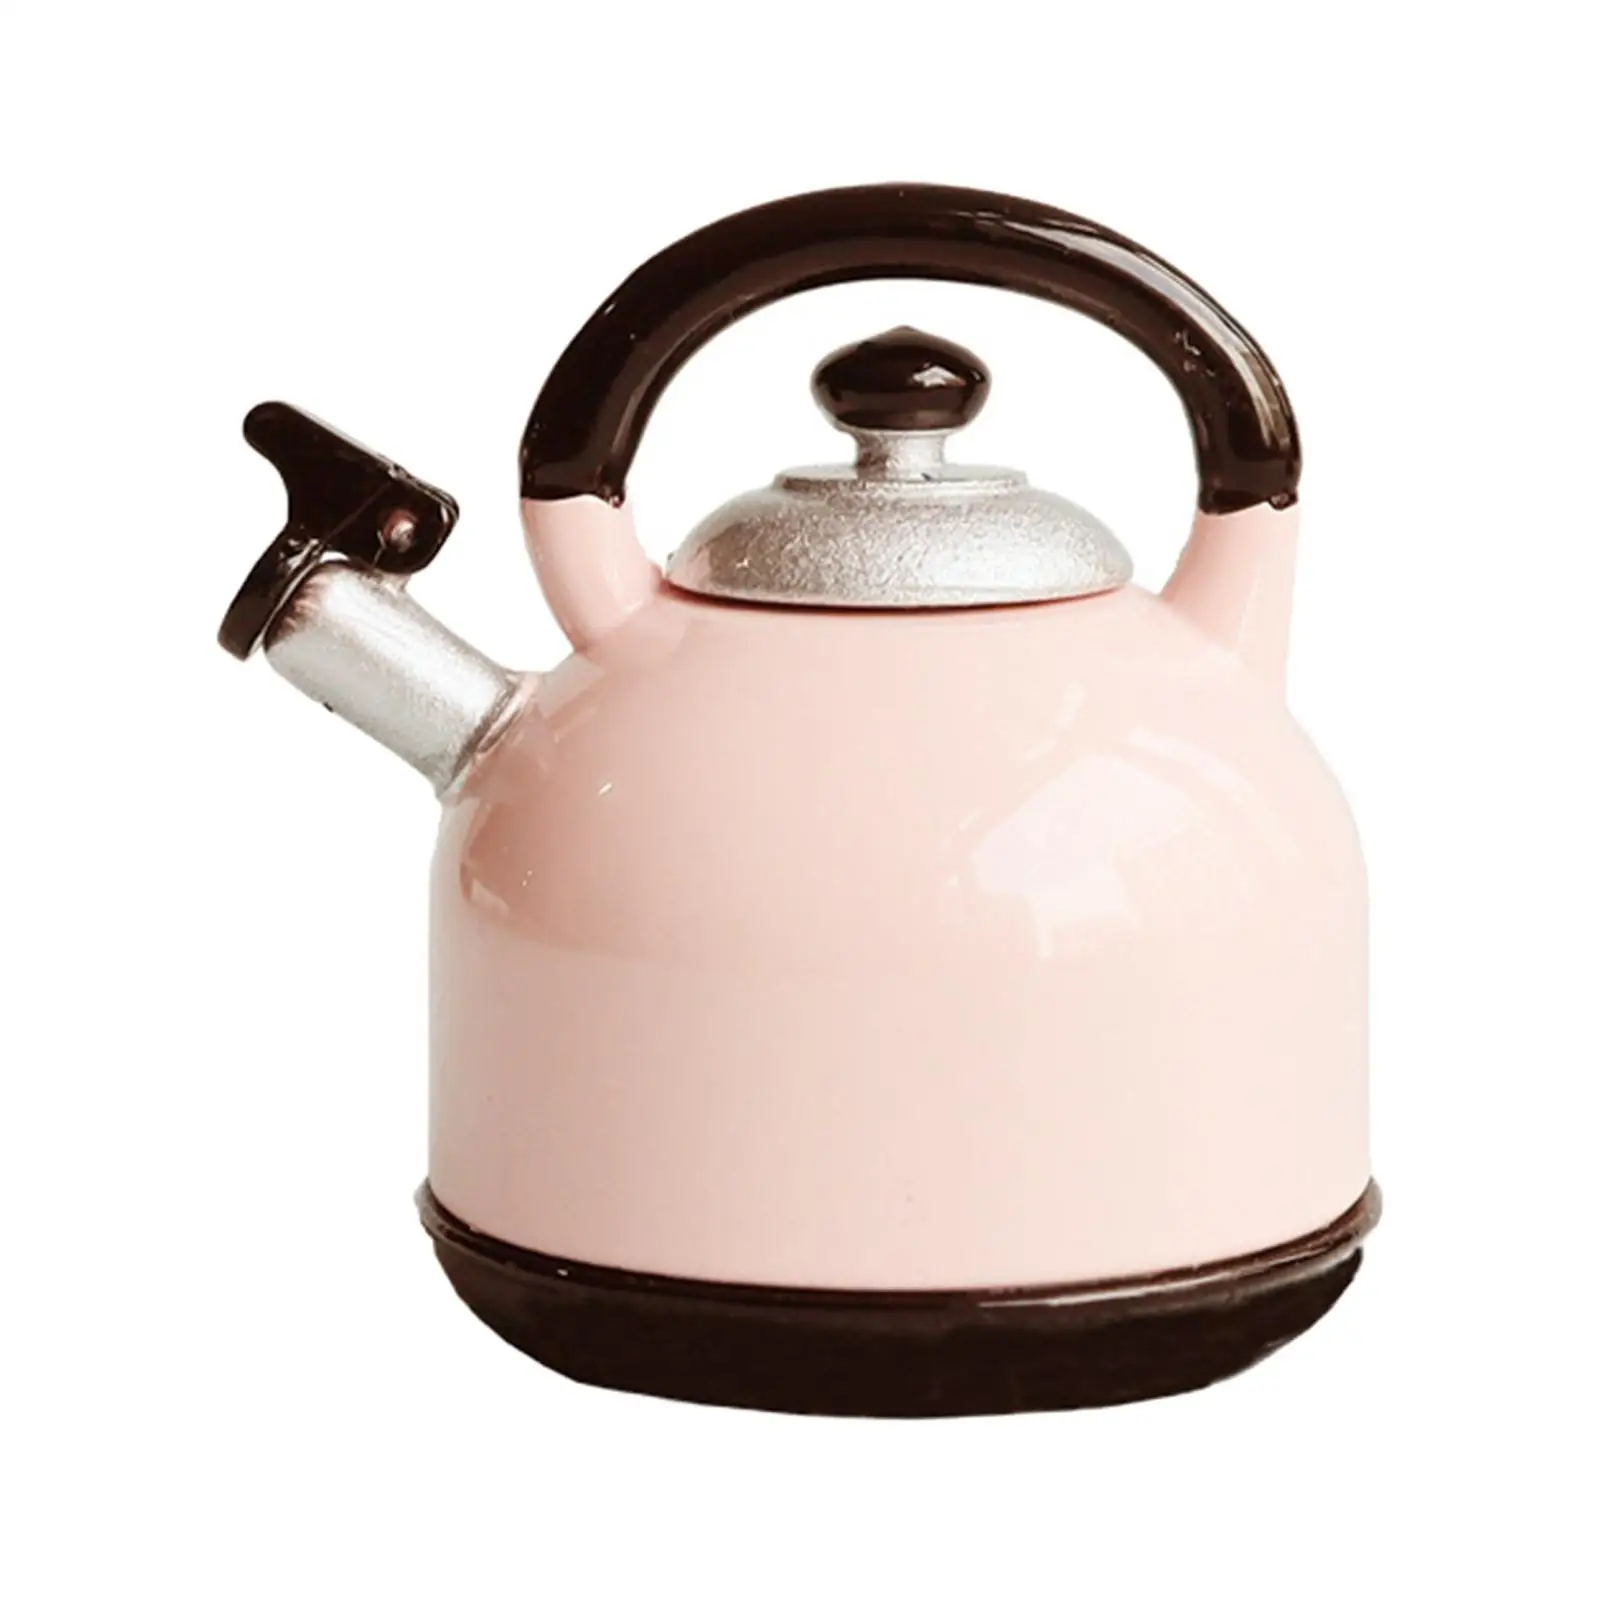 Miniature Teapot Decor Simulation for 1/6 1/8 Scale Dollhouse DIY Accessory